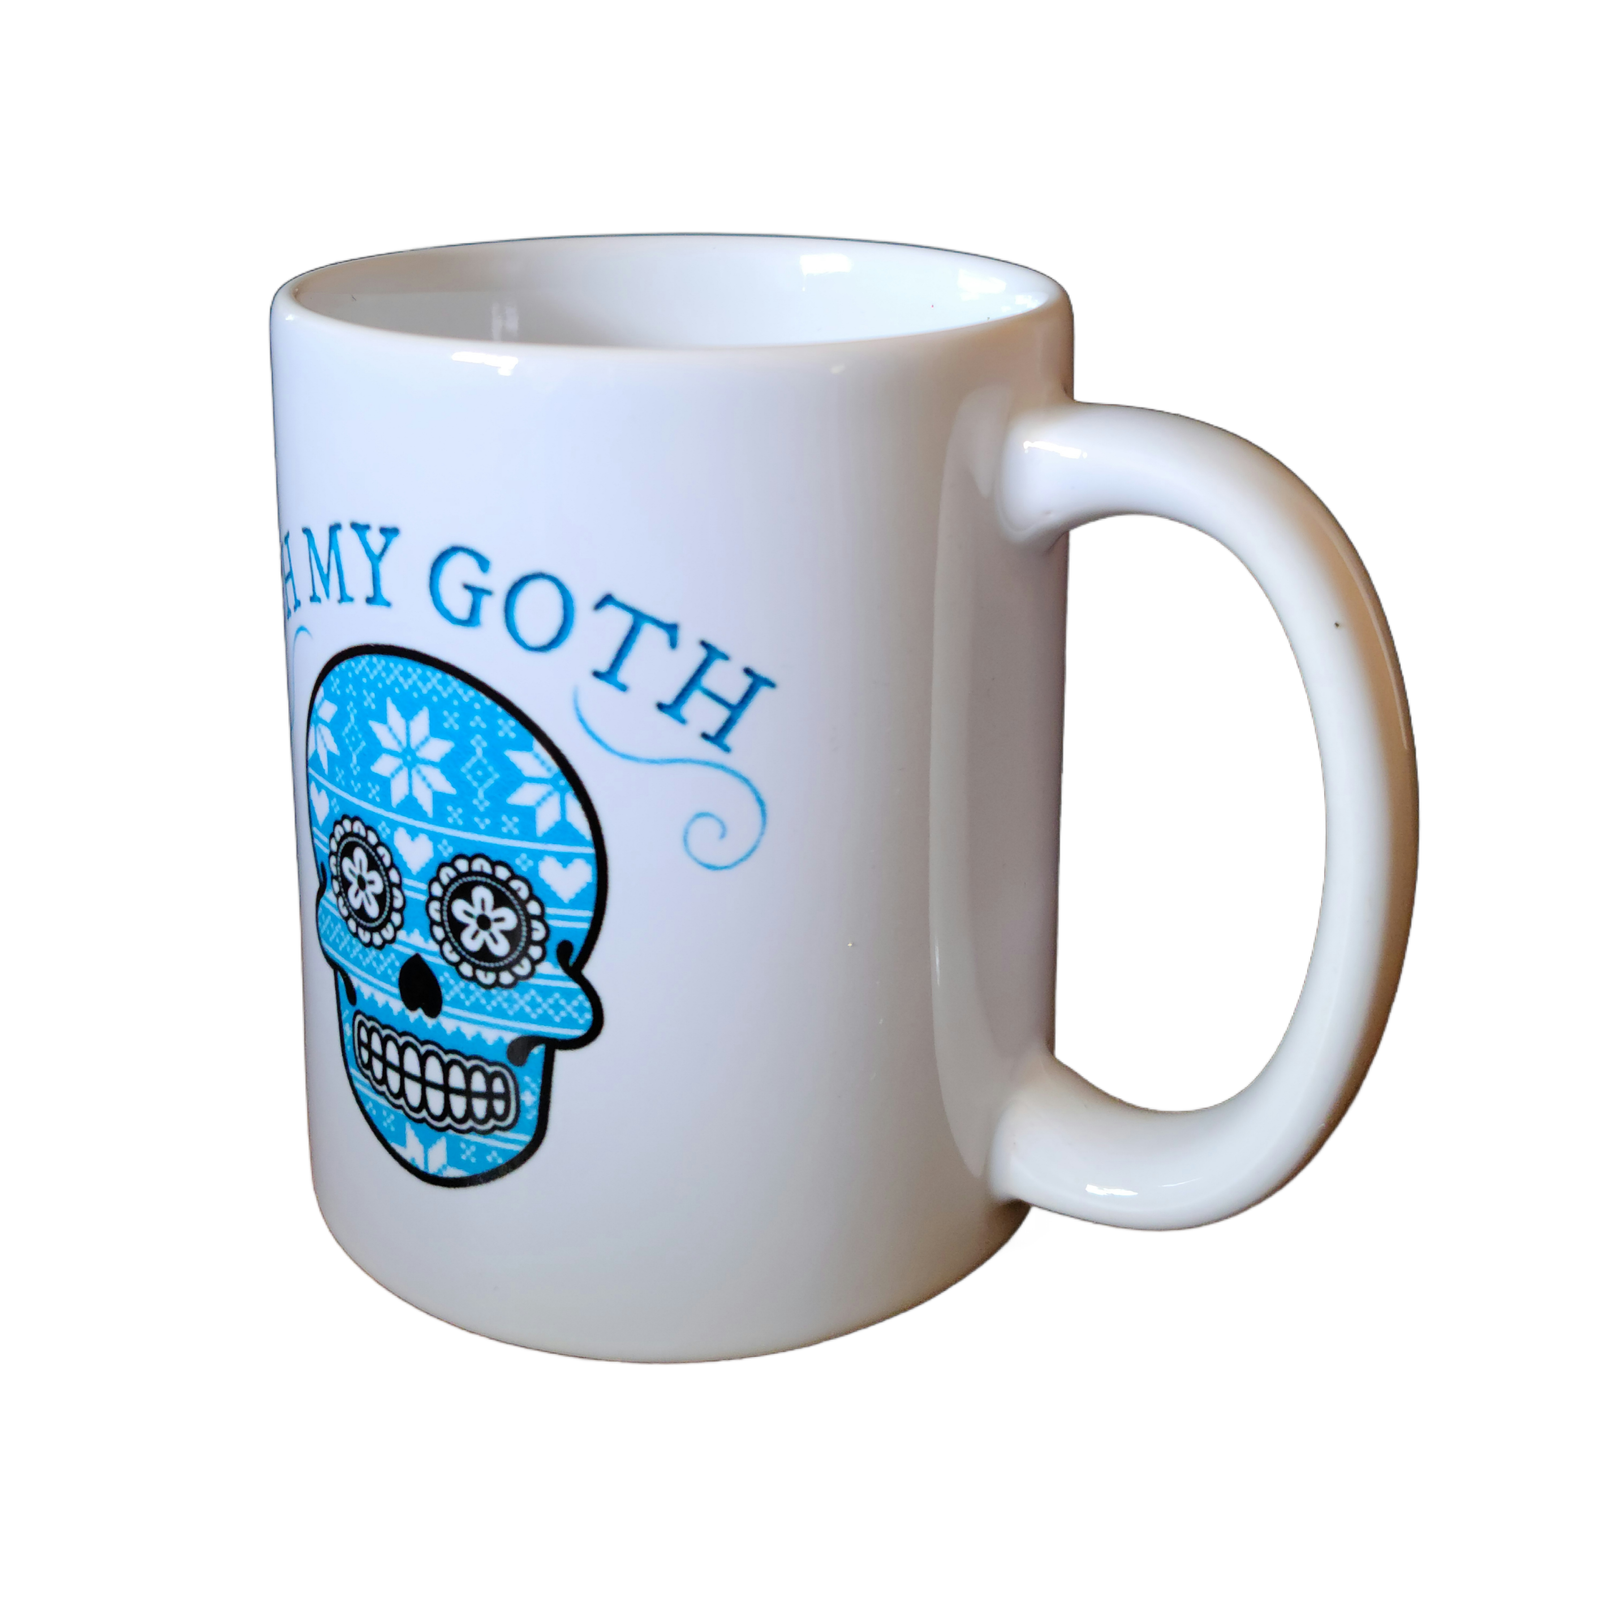 Oh my goth mug side angle